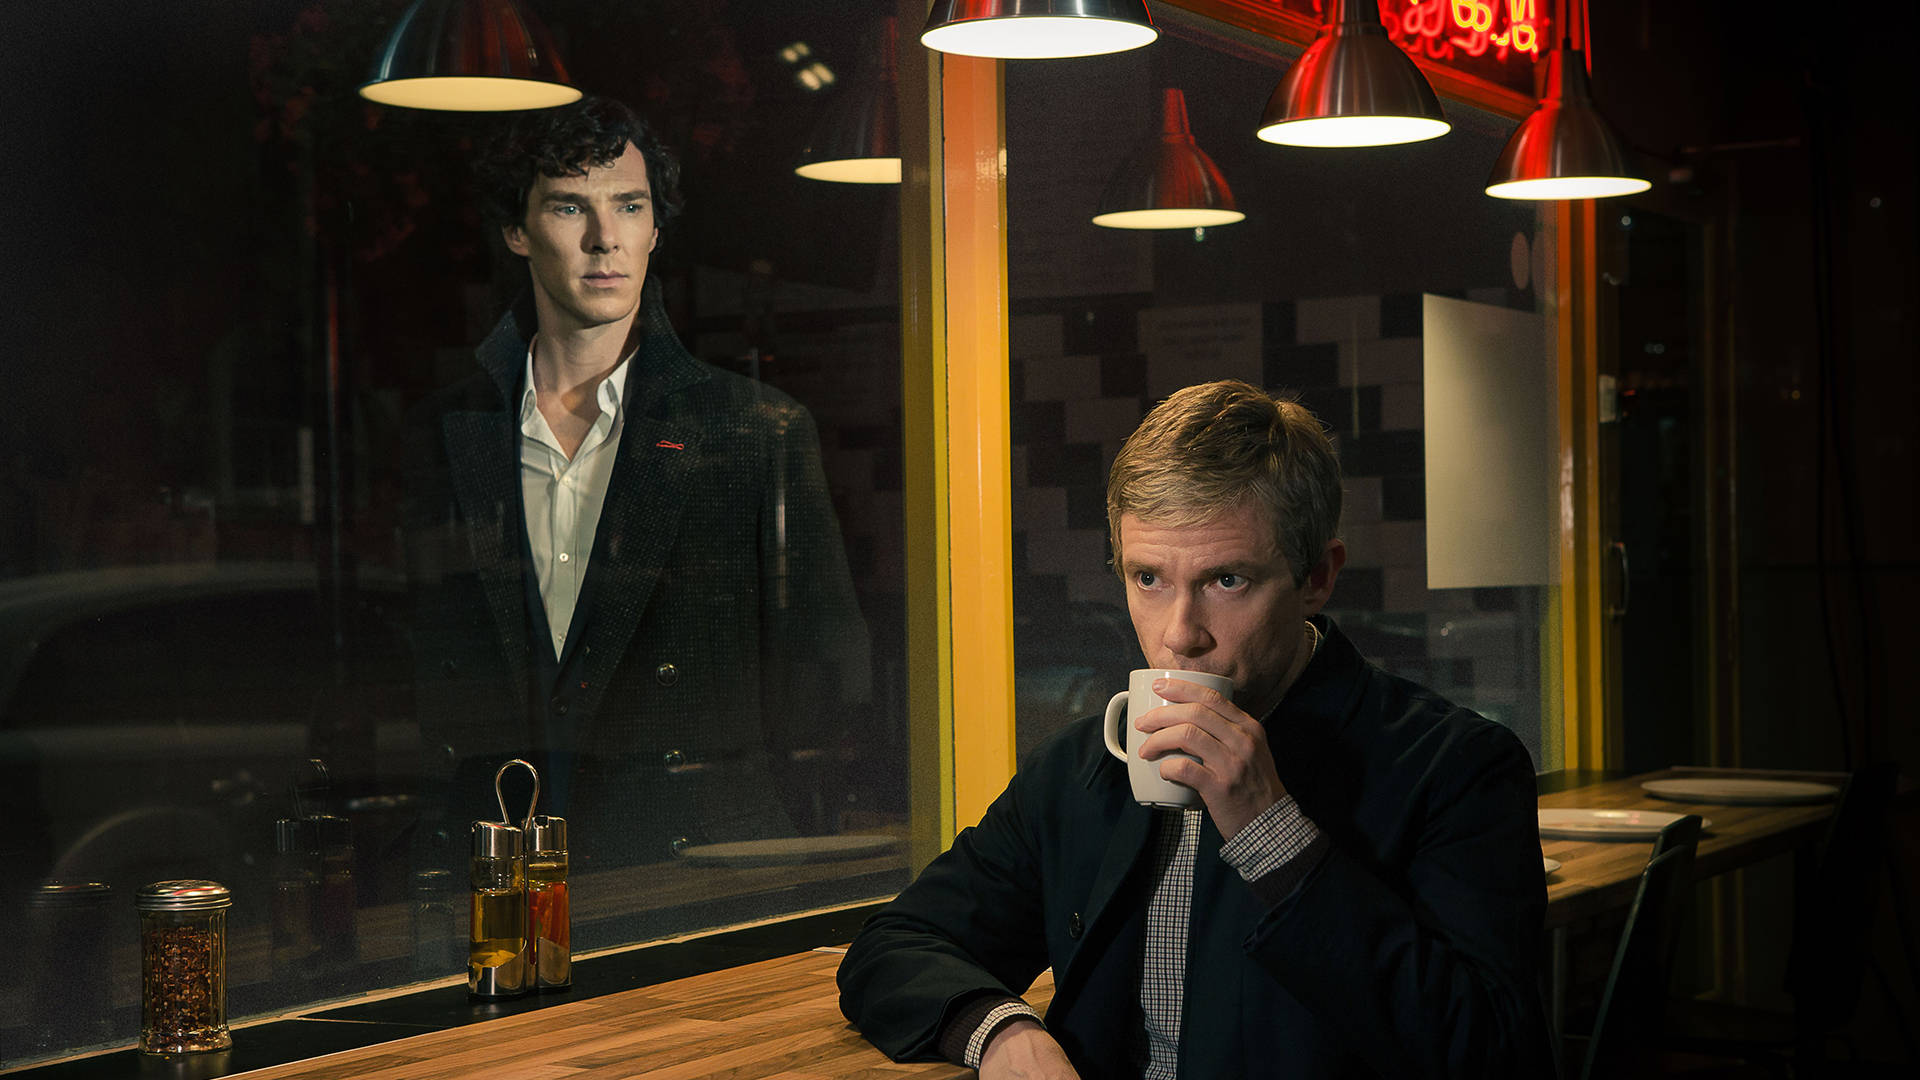 Sherlock John Watson At Diner